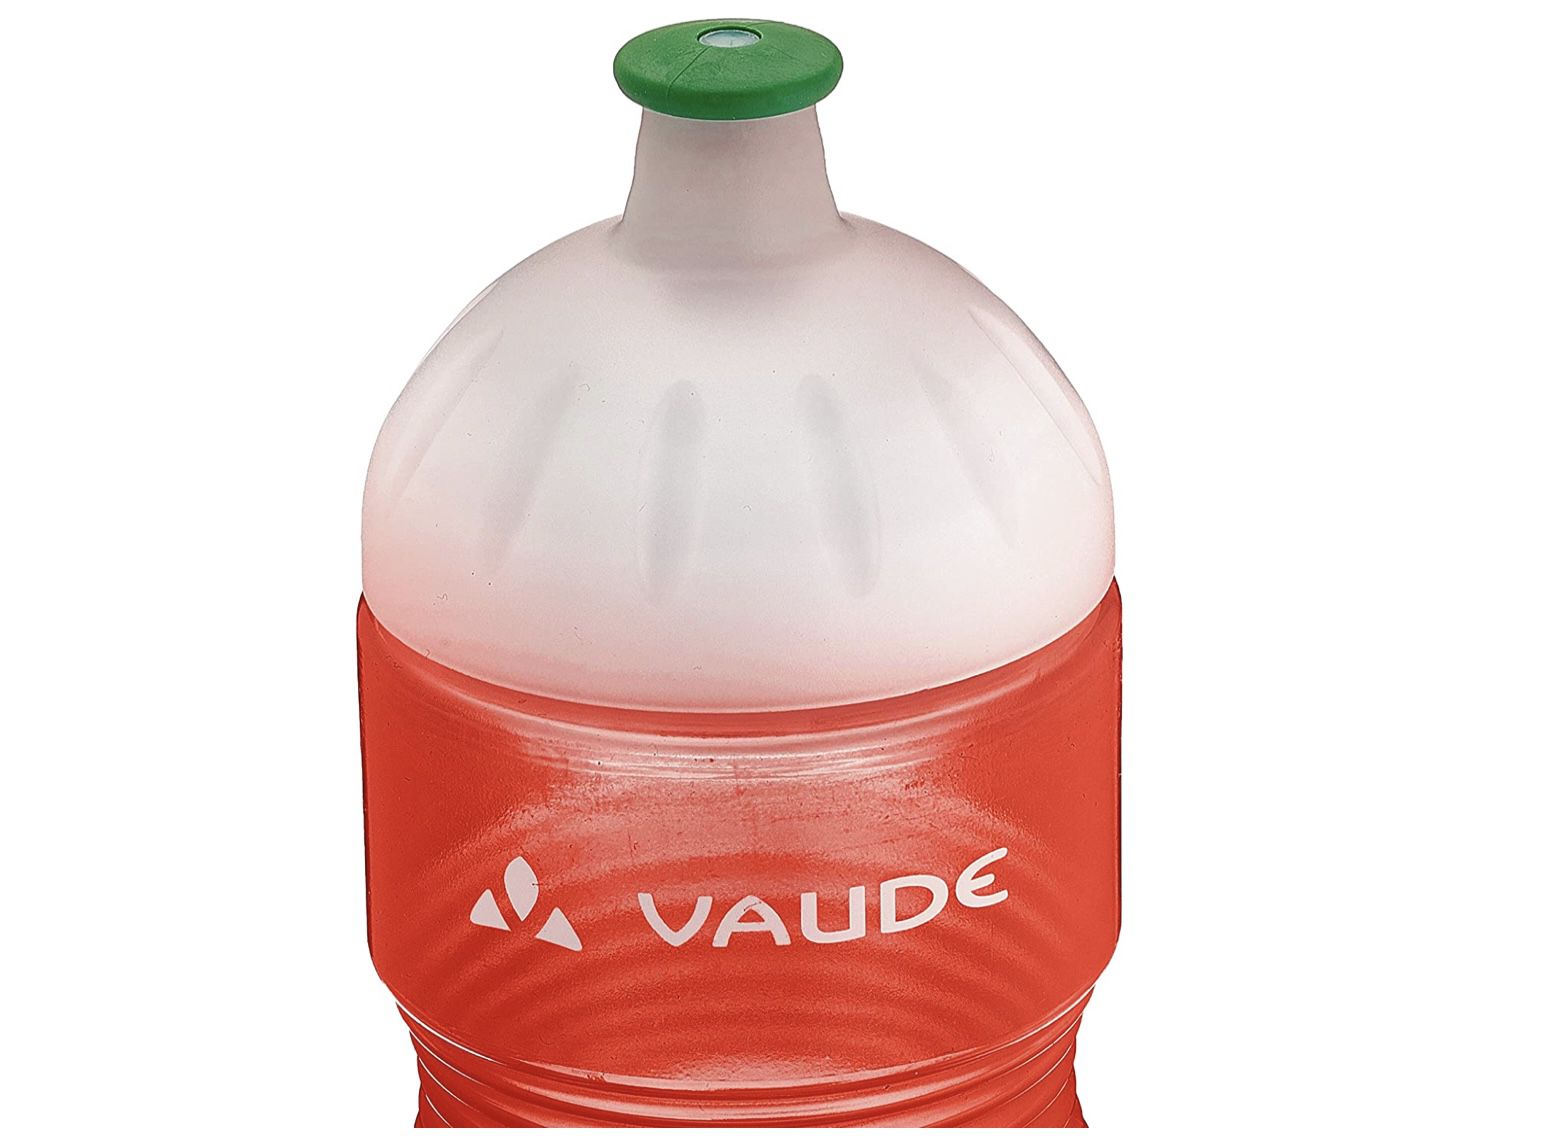 VAUDE 0,75l Bike Bottle in Rot für 2,49€ (statt 9€)   Prime